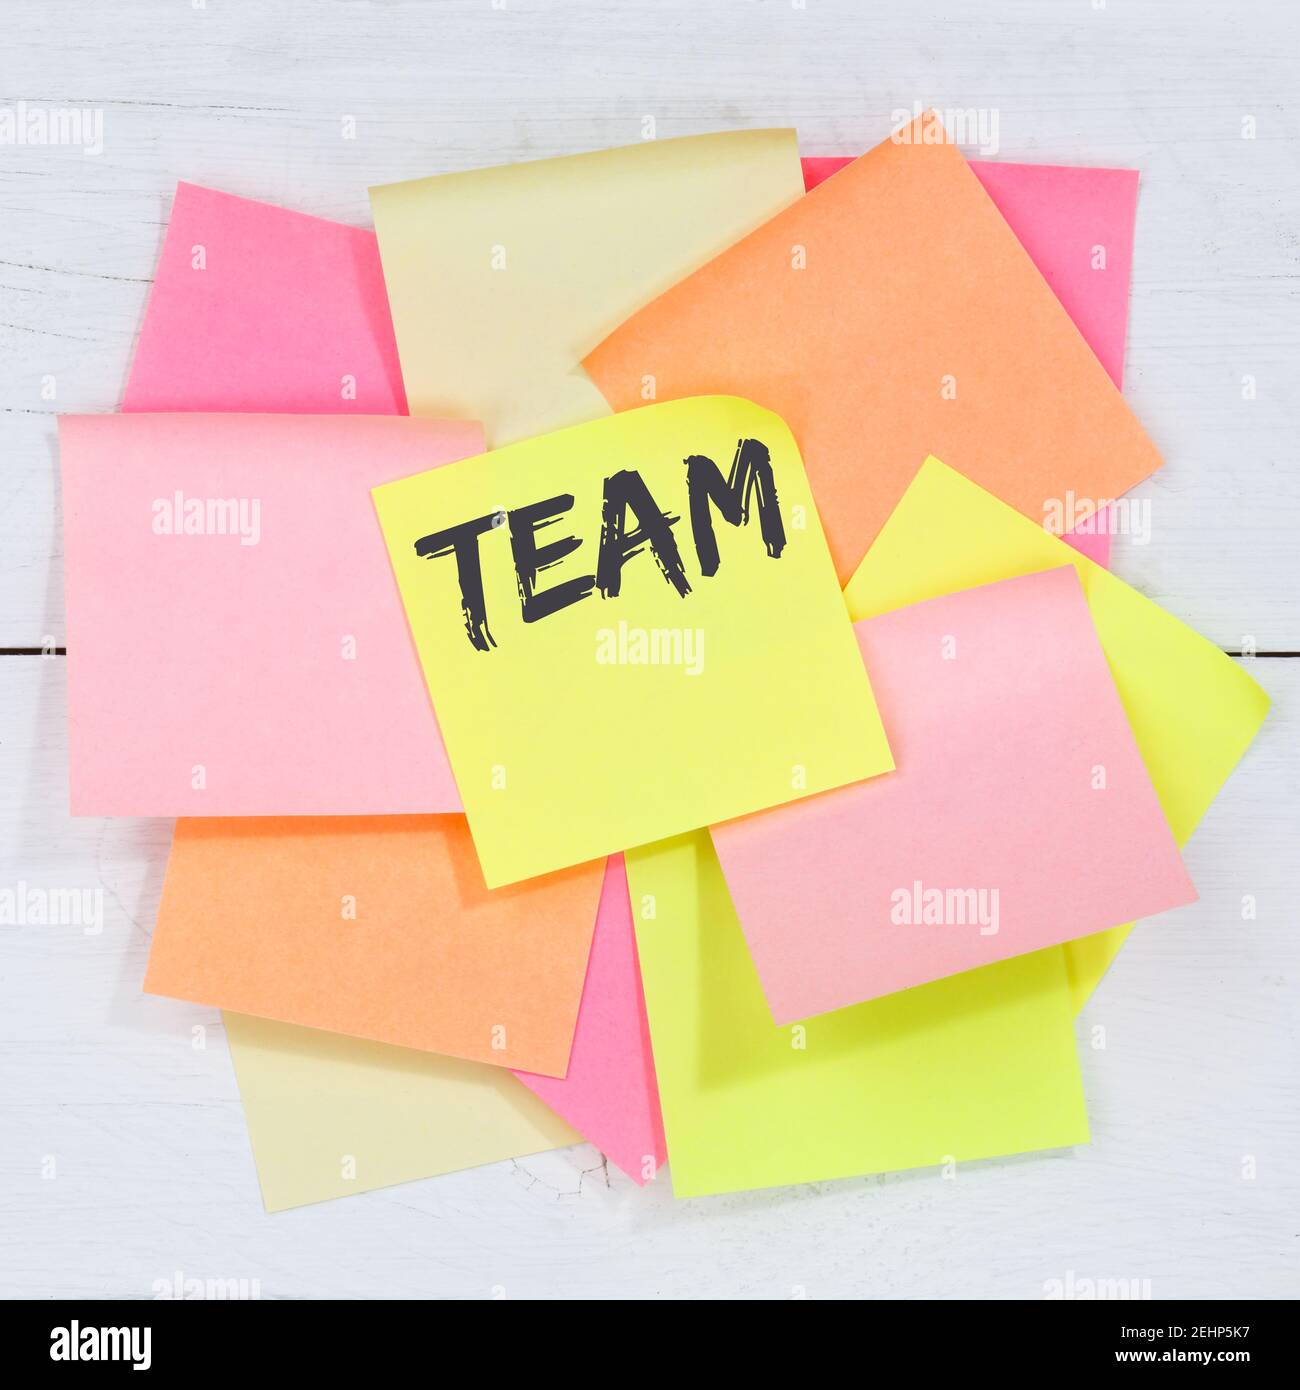 Team teamwork working together business concept desk note paper notepaper Stock Photo